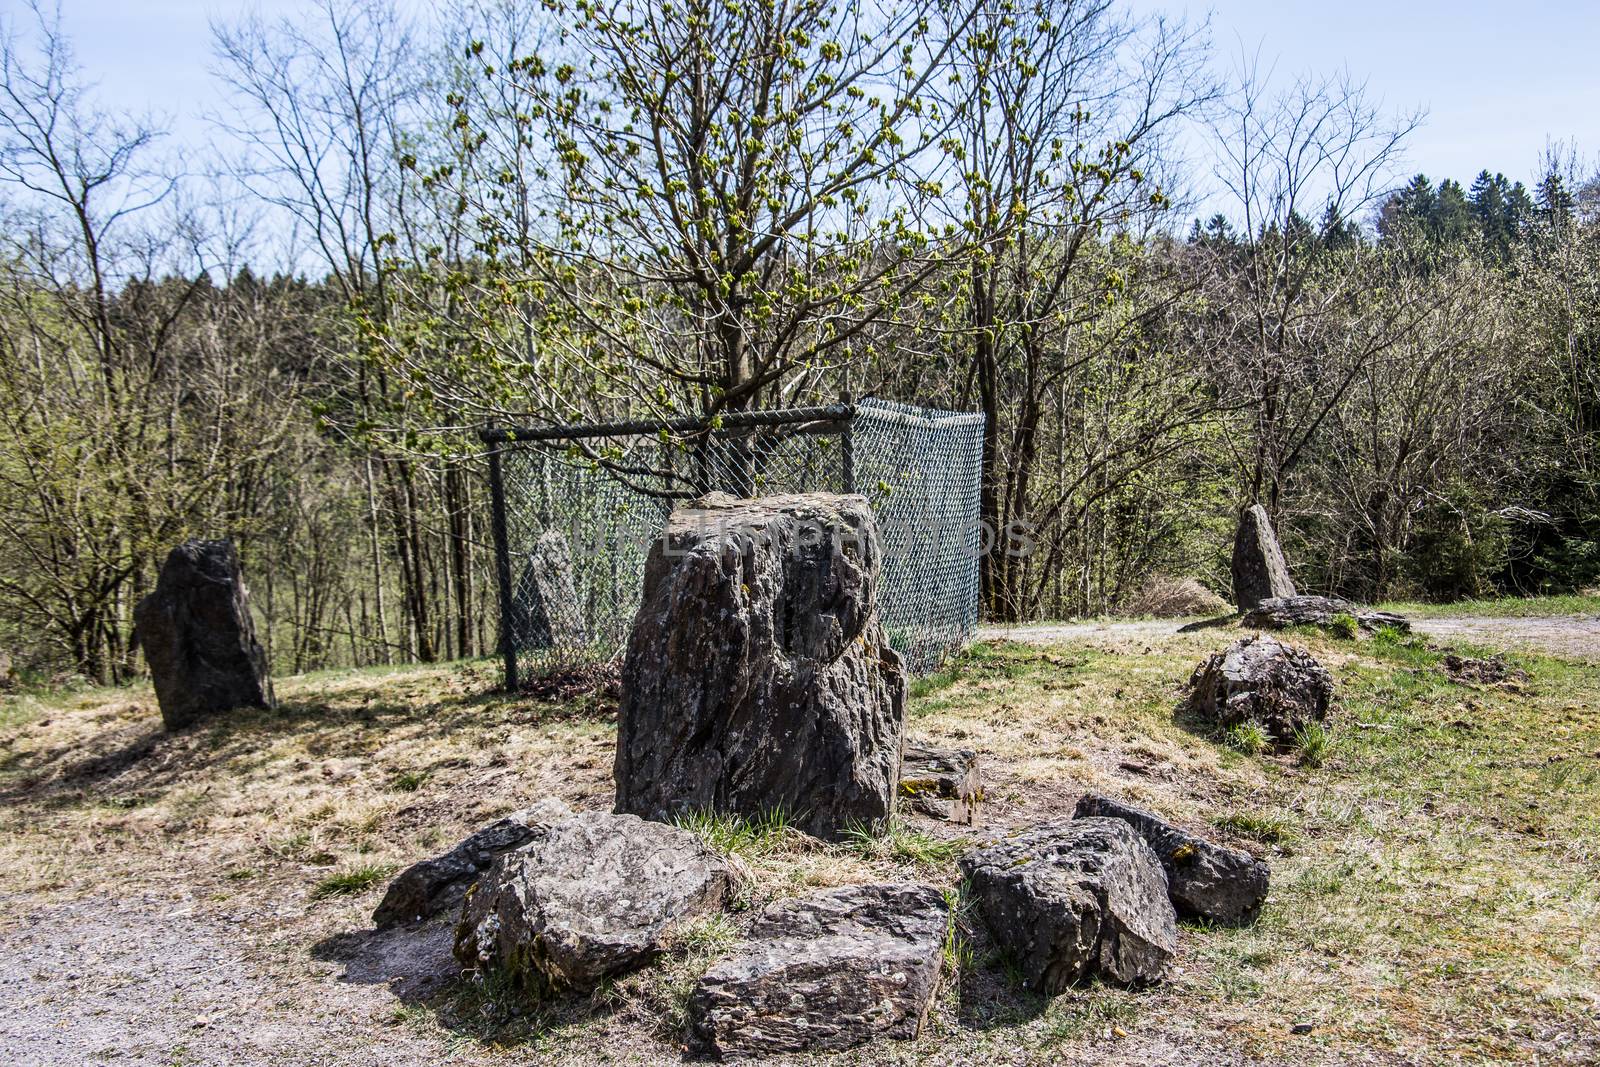 Erratic boulders around solitary deciduous tree